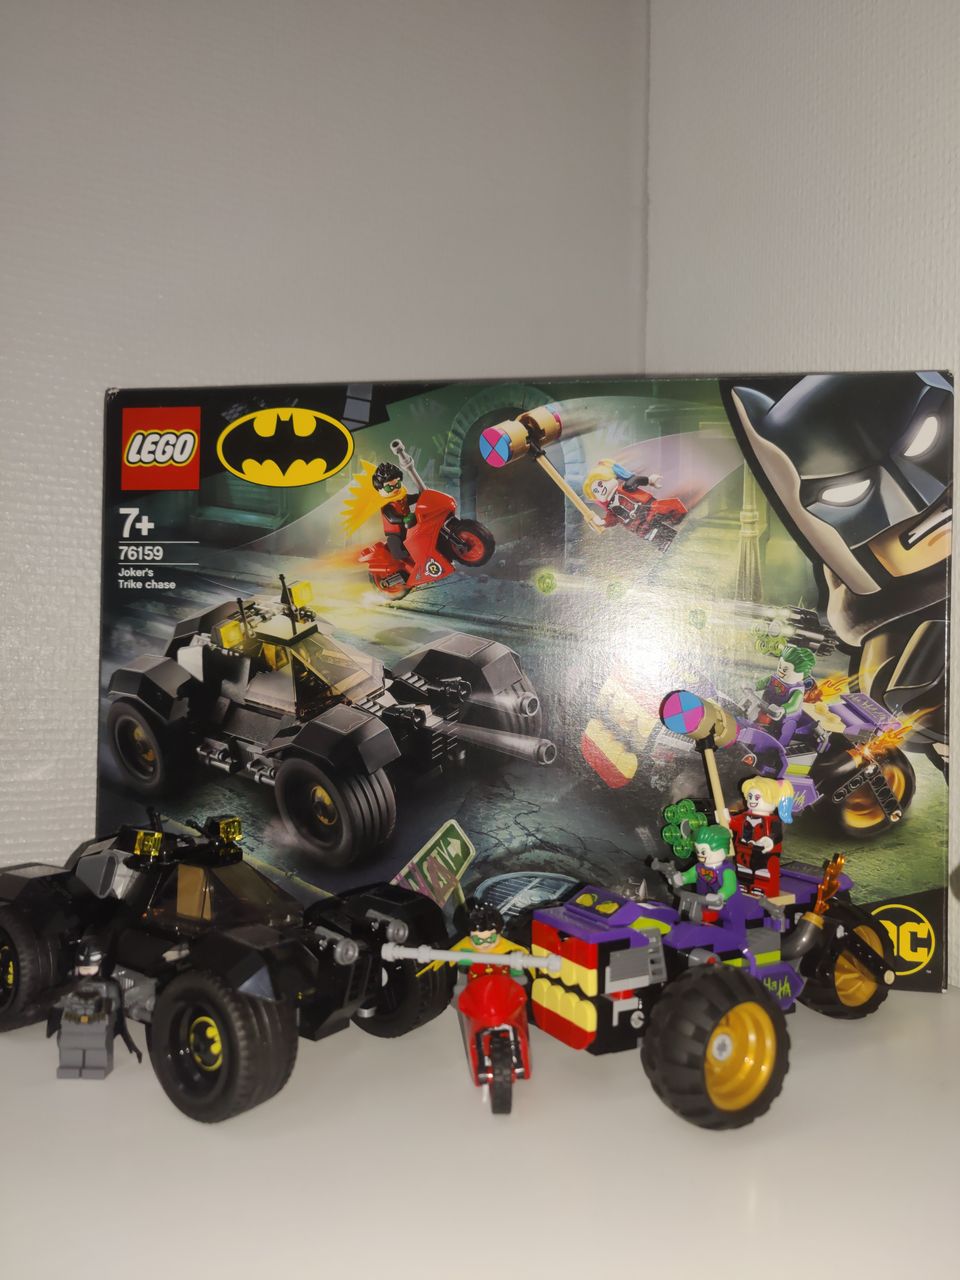 Lego Batman Joker's Trike chase